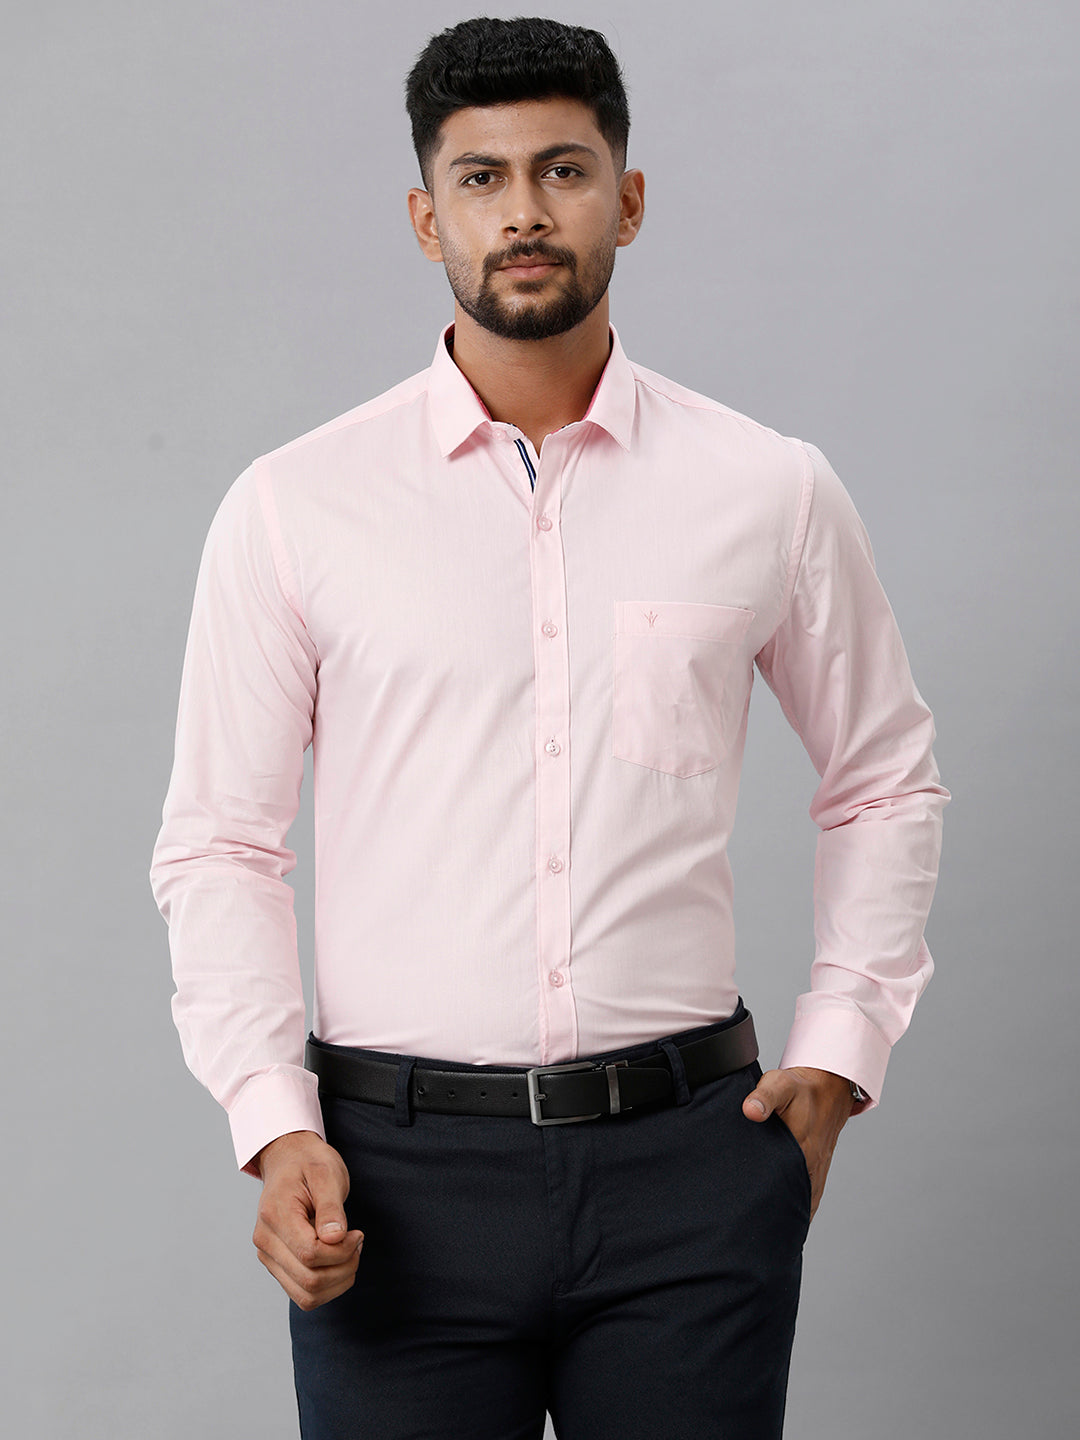 Mens Premium Cotton Formal Shirt Full Sleeves Light Pink MH G115